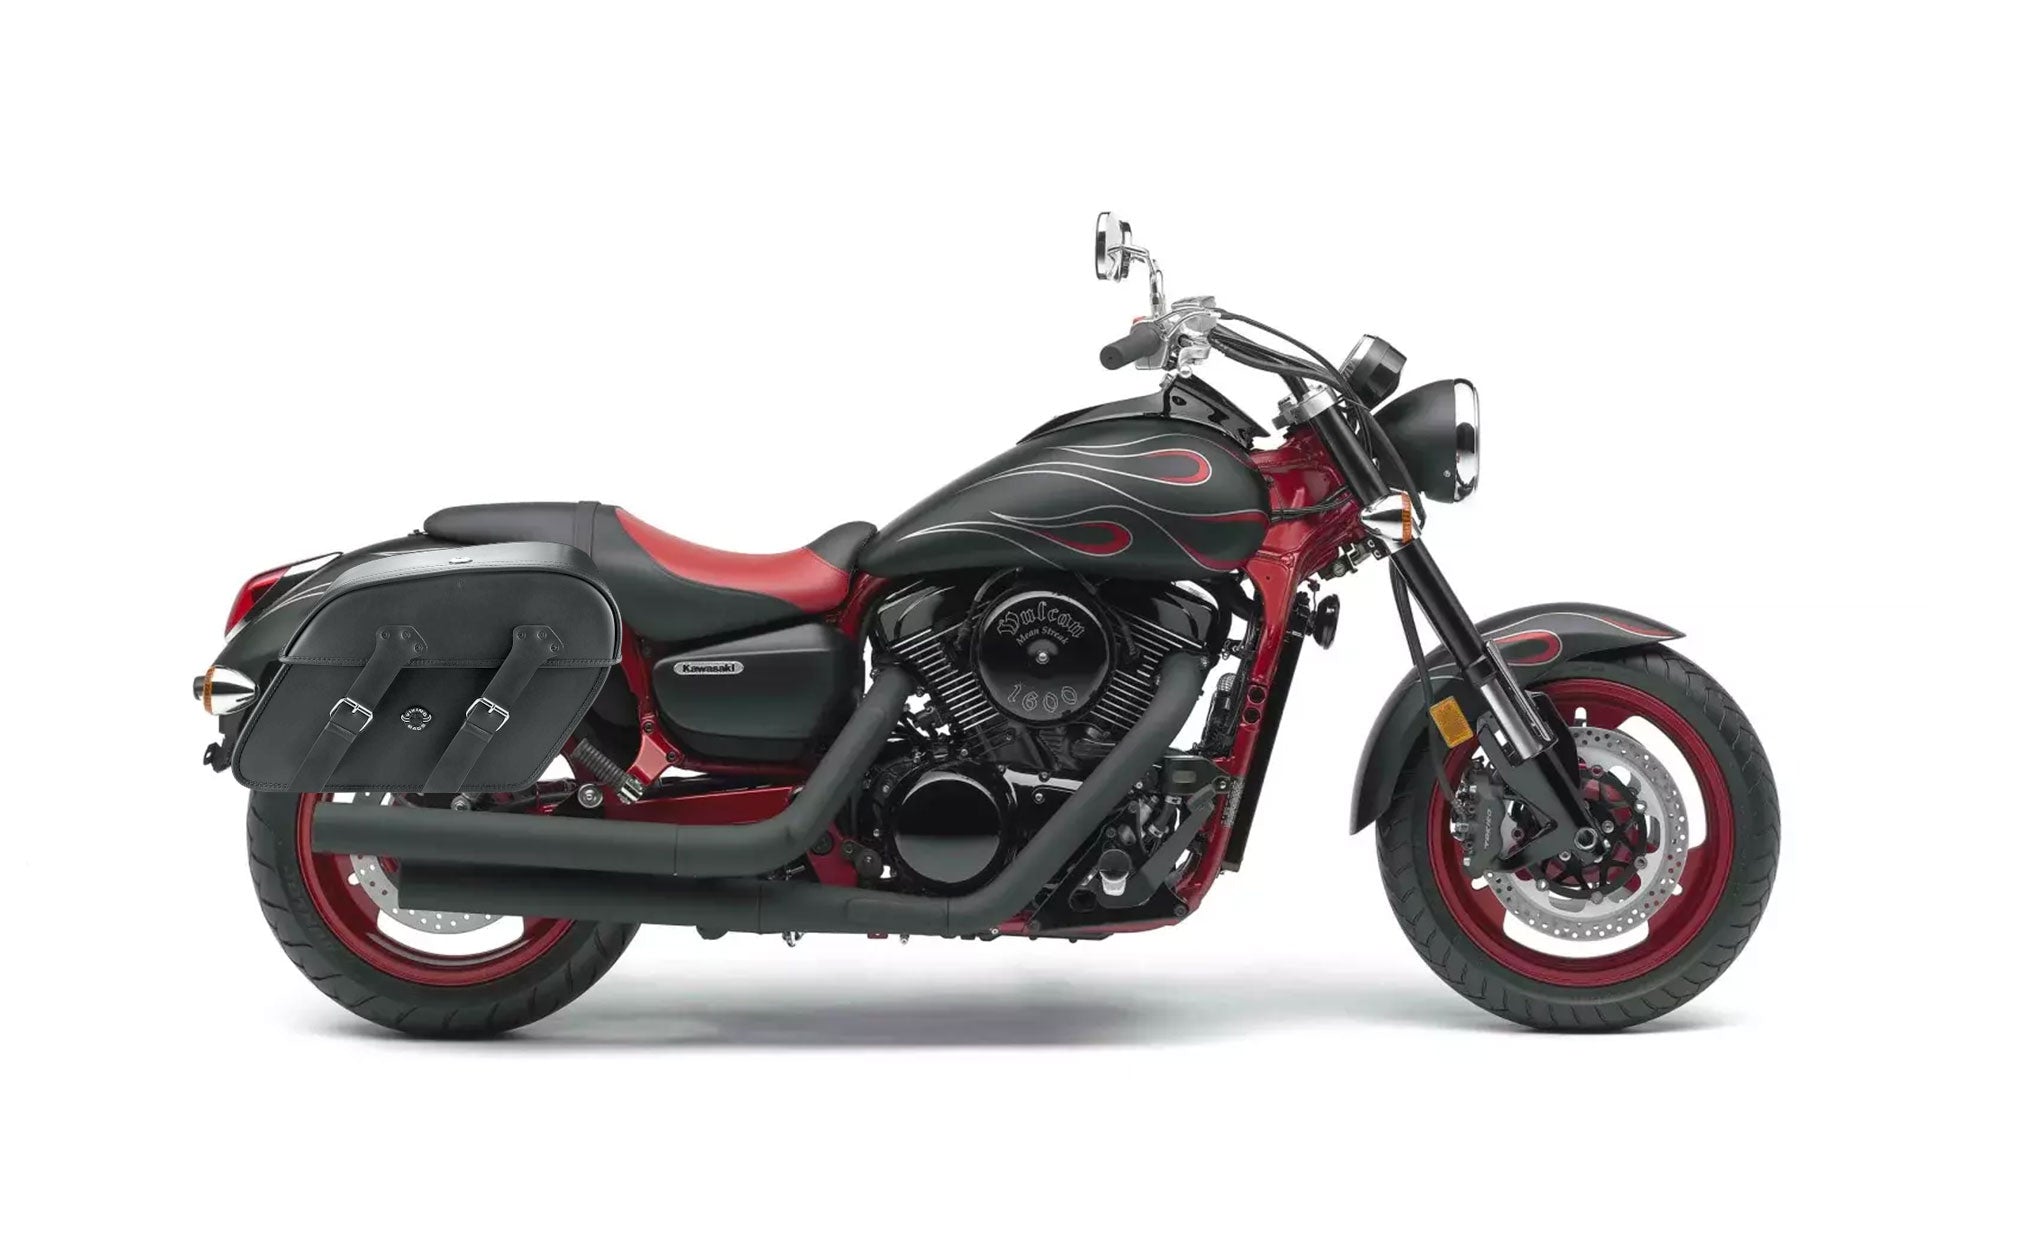 Viking Raven Extra Large Kawasaki Mean Streak 1600 Leather Motorcycle Saddlebags on Bike Photo @expand